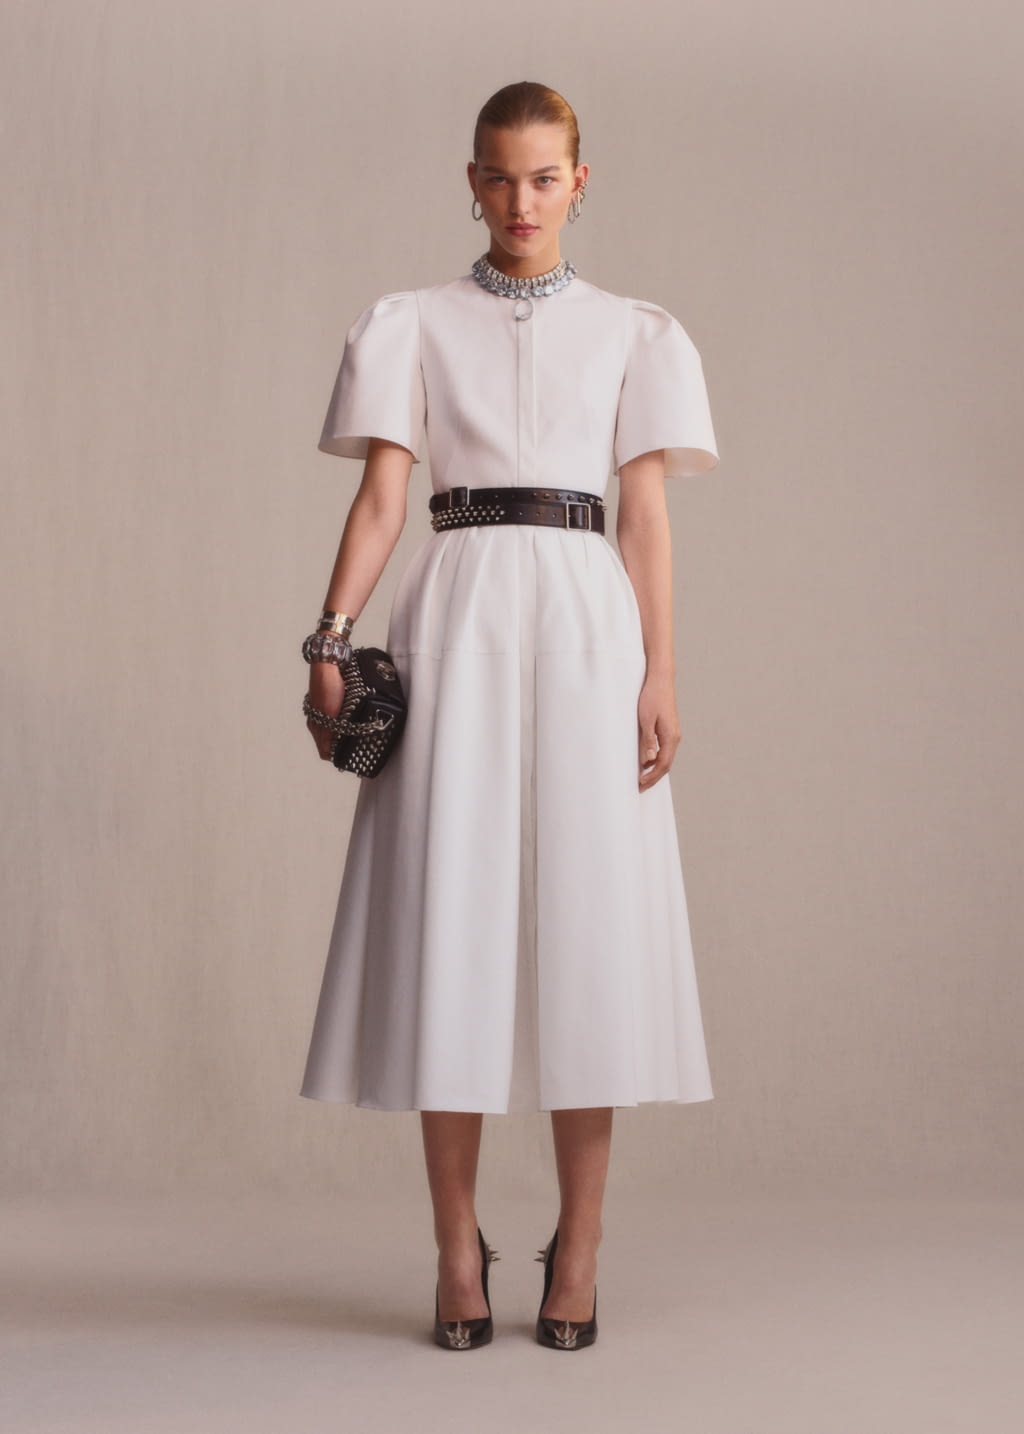 Alexander McQueen PF19 womenswear #11 - Tagwalk: The Fashion Search Engine